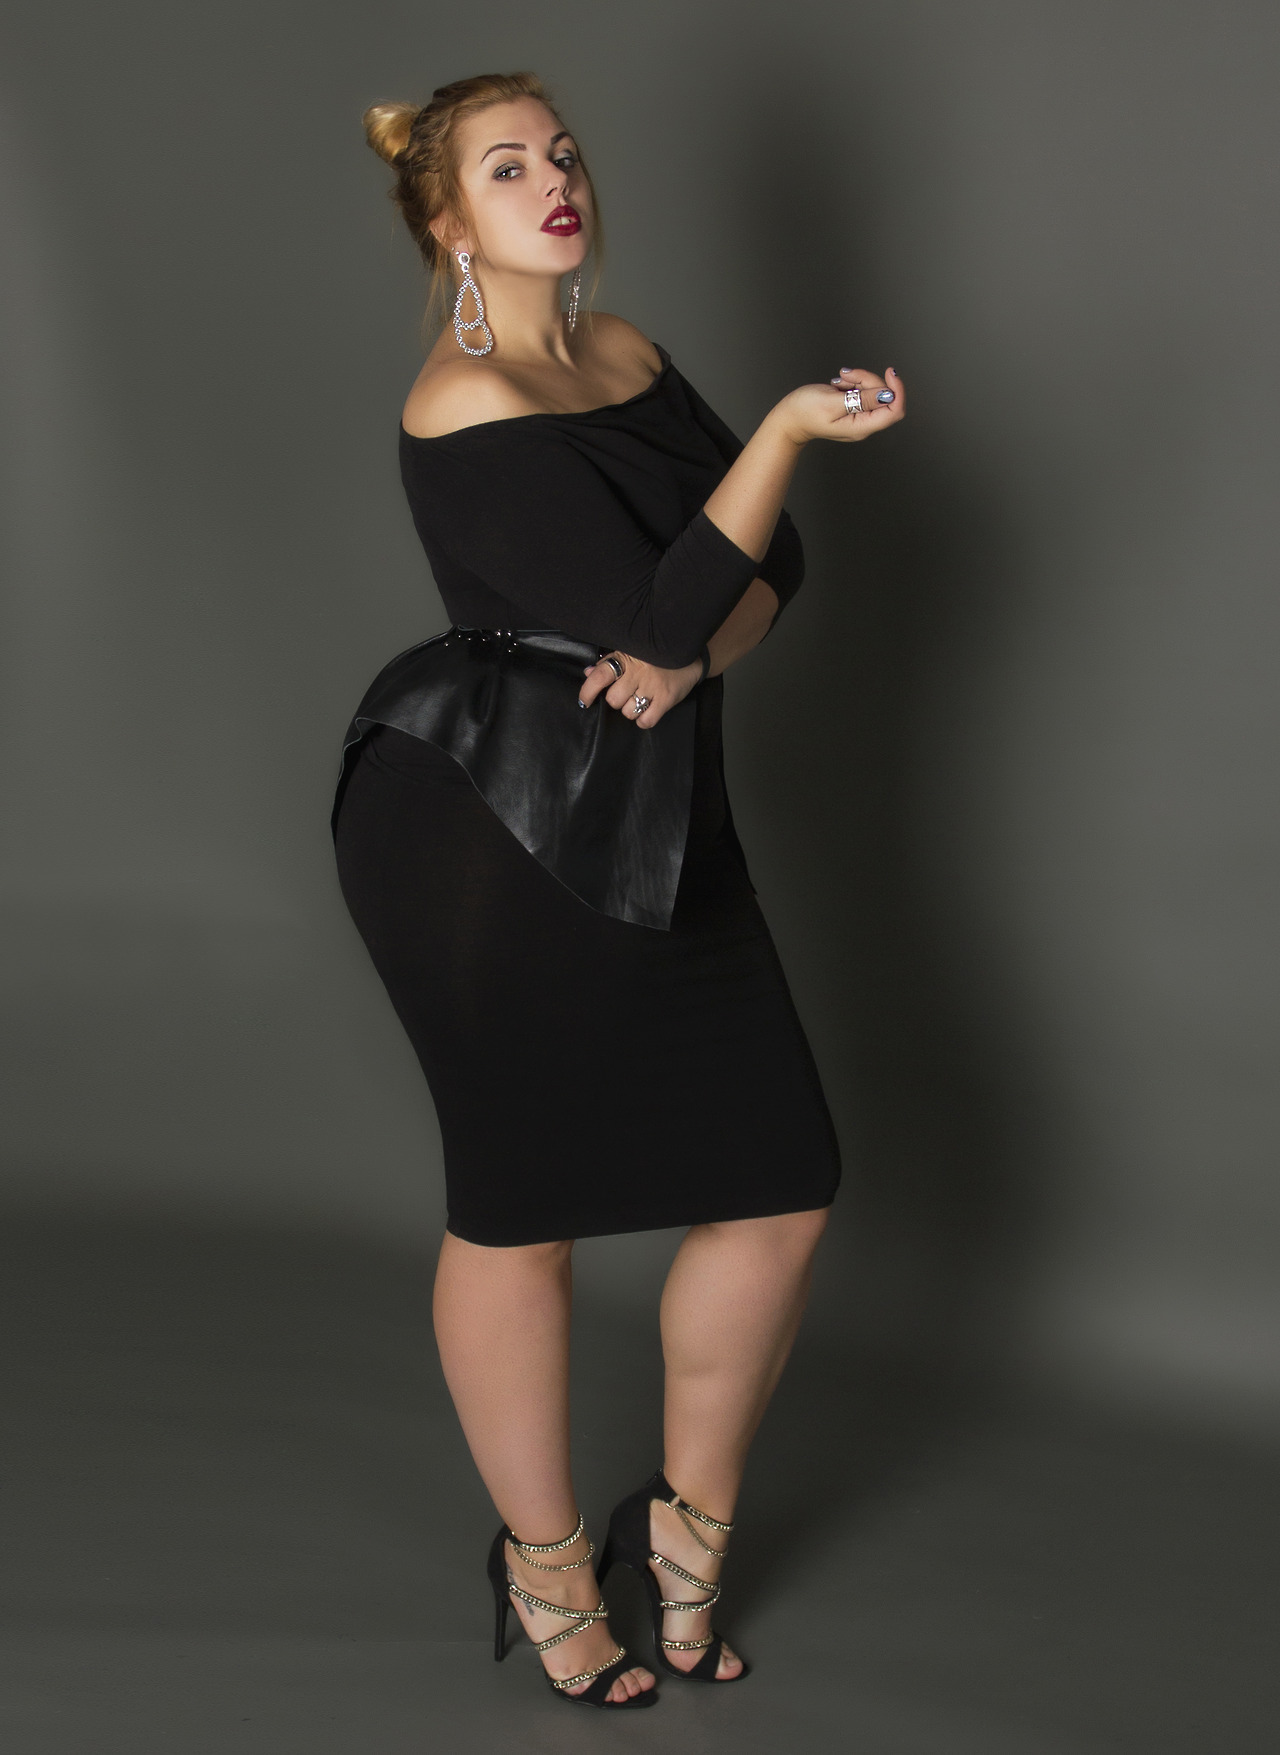 Russian Plus Size Curvy Model Katalina Gorskikh Tumblr Blog Gallery